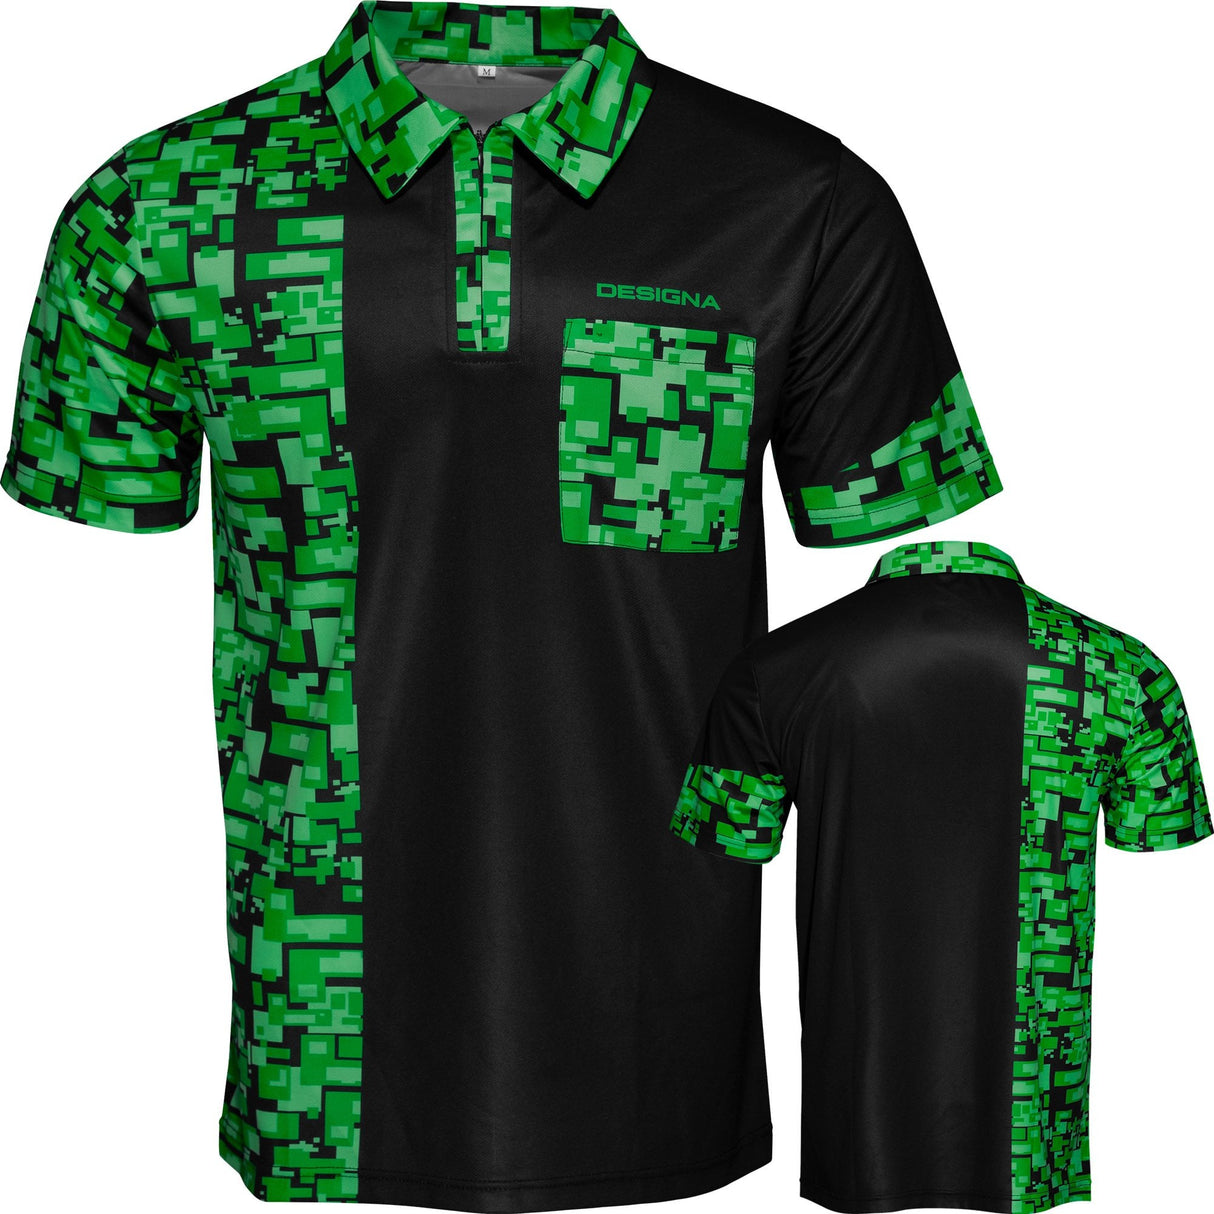 *Designa Code 4 Dart Shirt - Black with Green